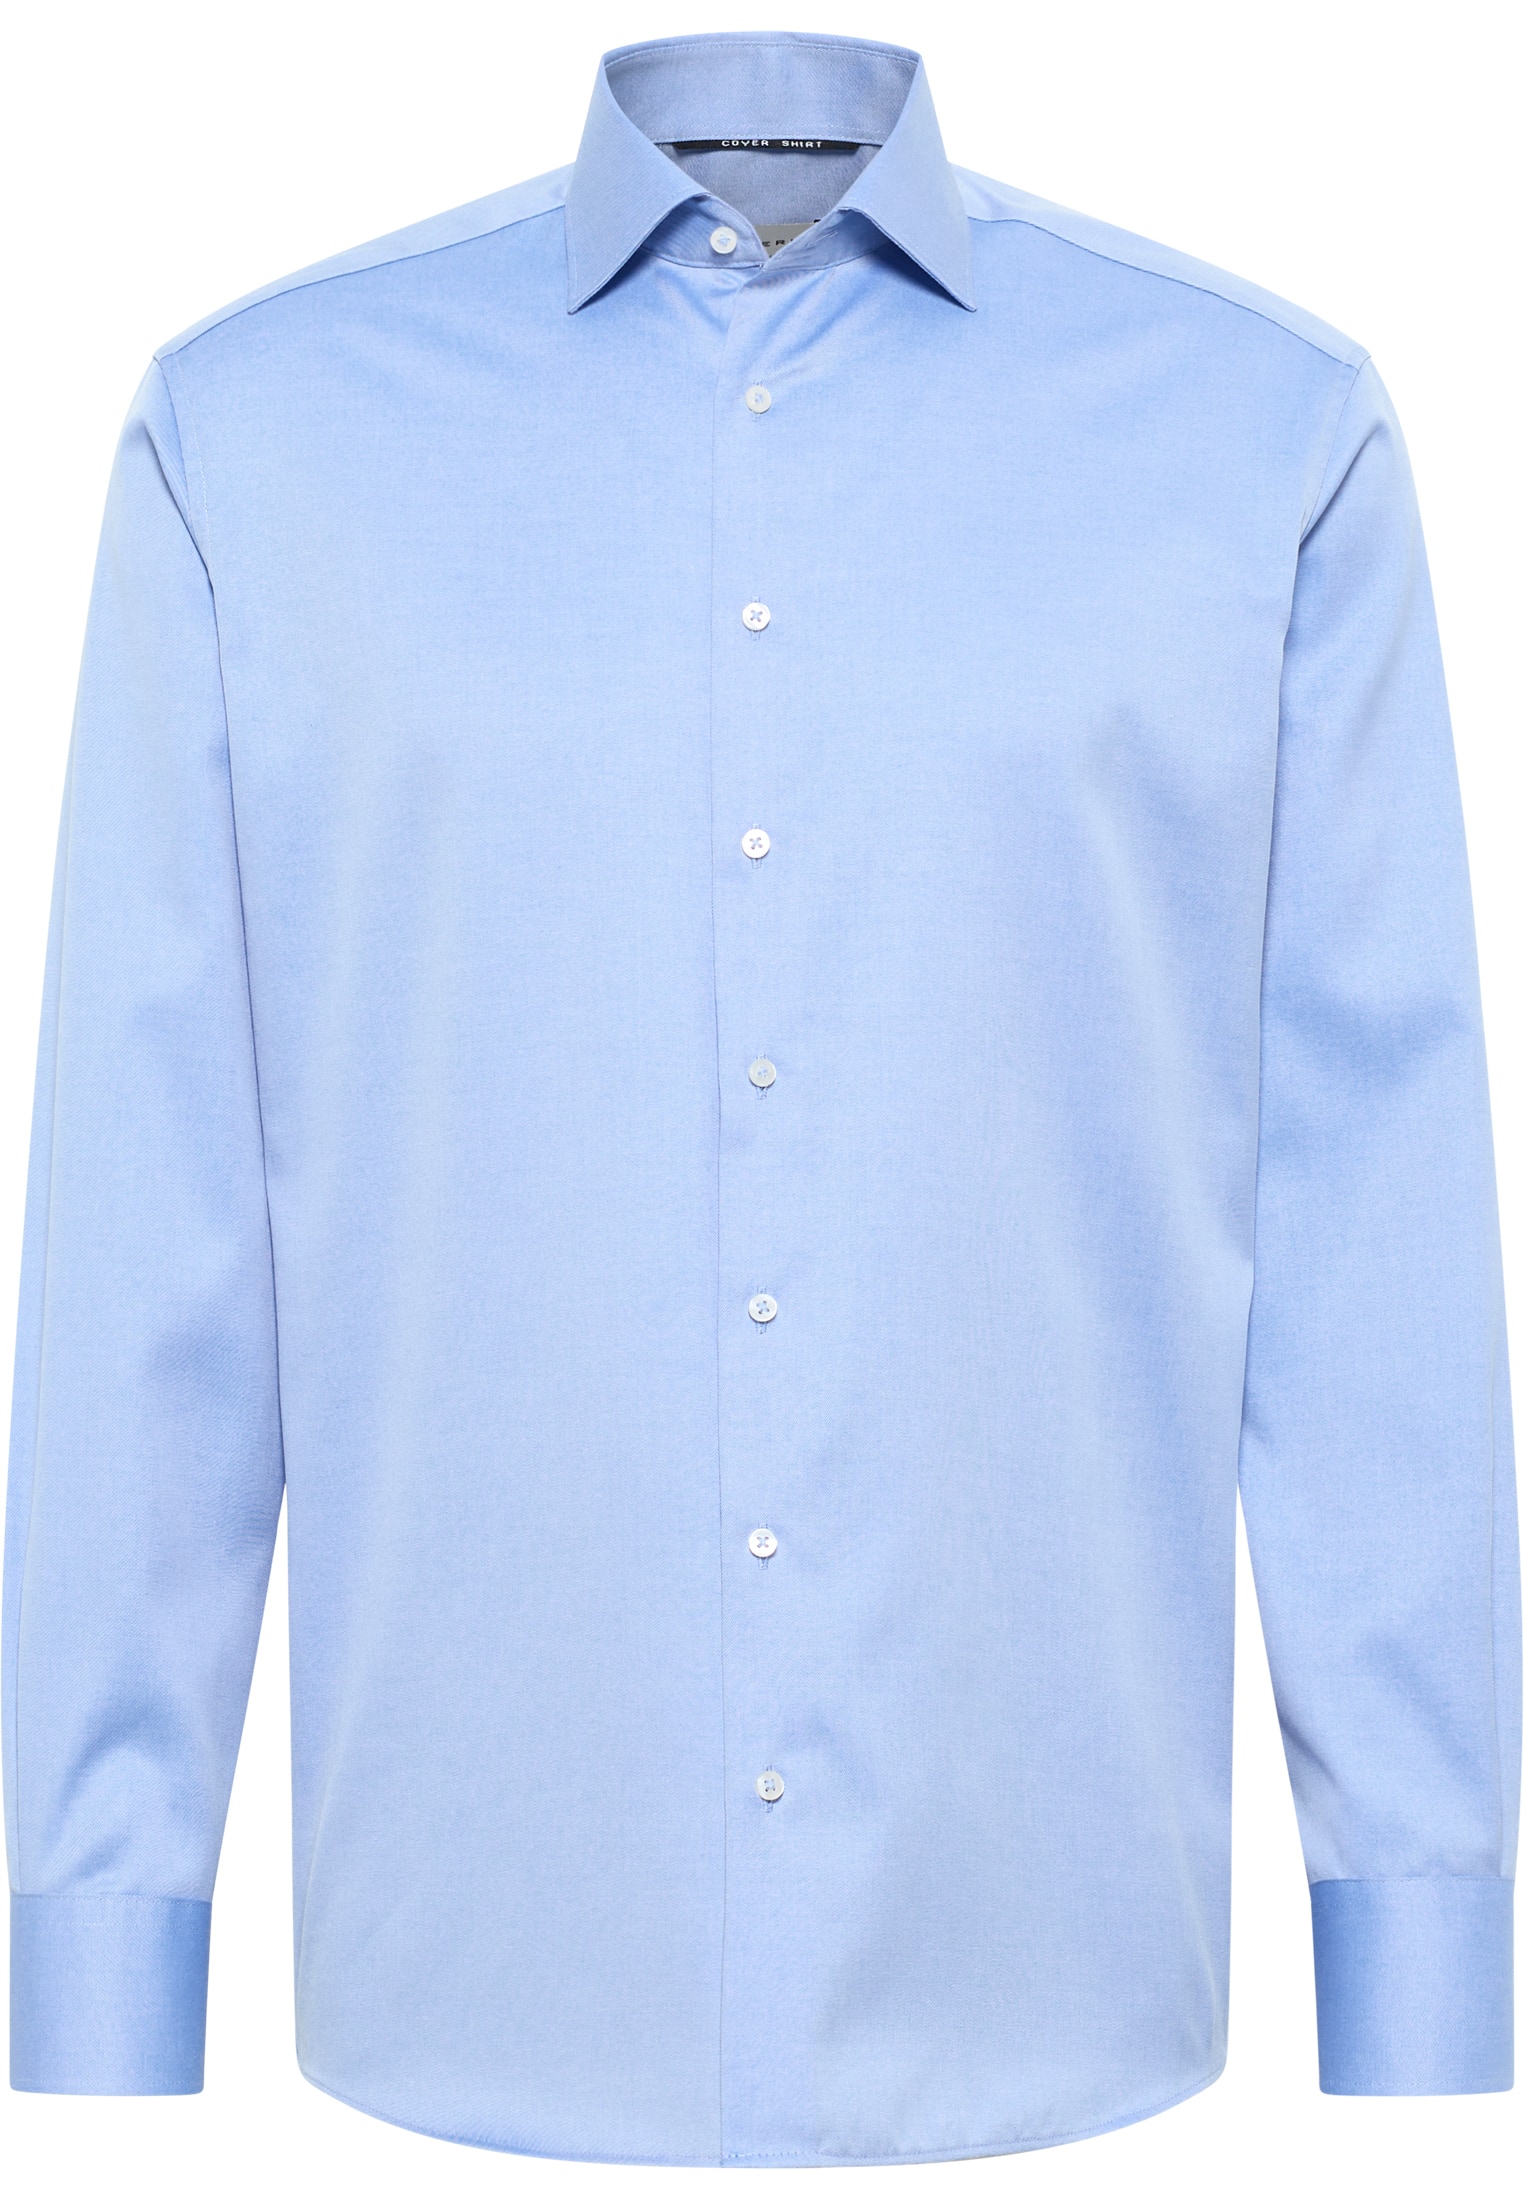 MODERN FIT Cover Shirt in blau unifarben